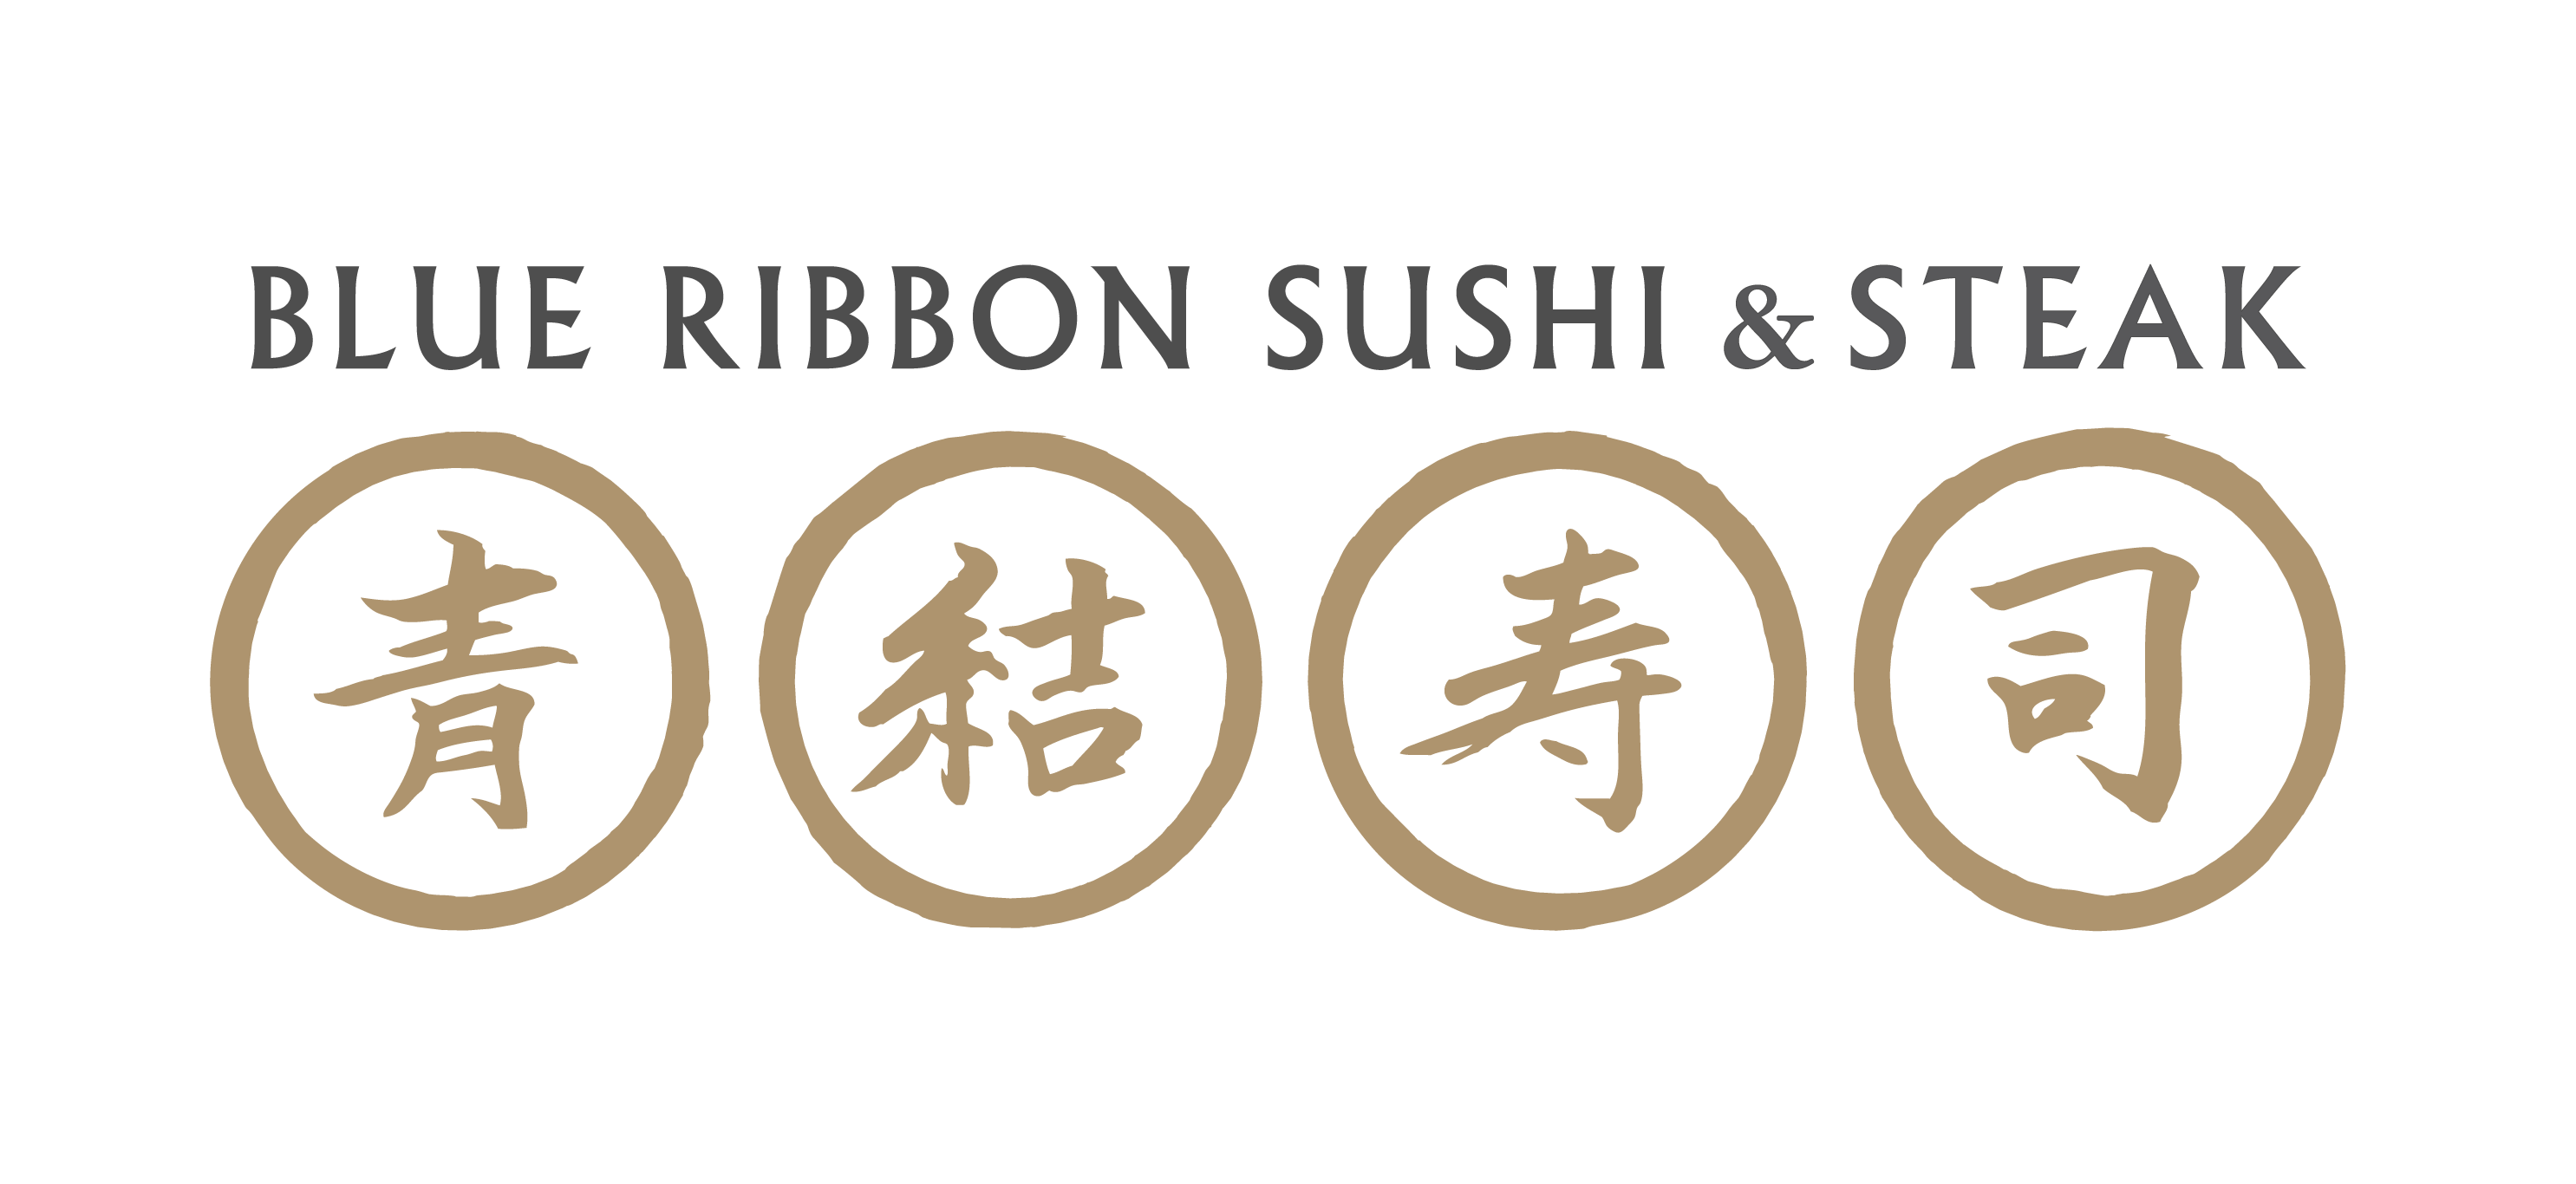 About - Blue Ribbon Restaurants